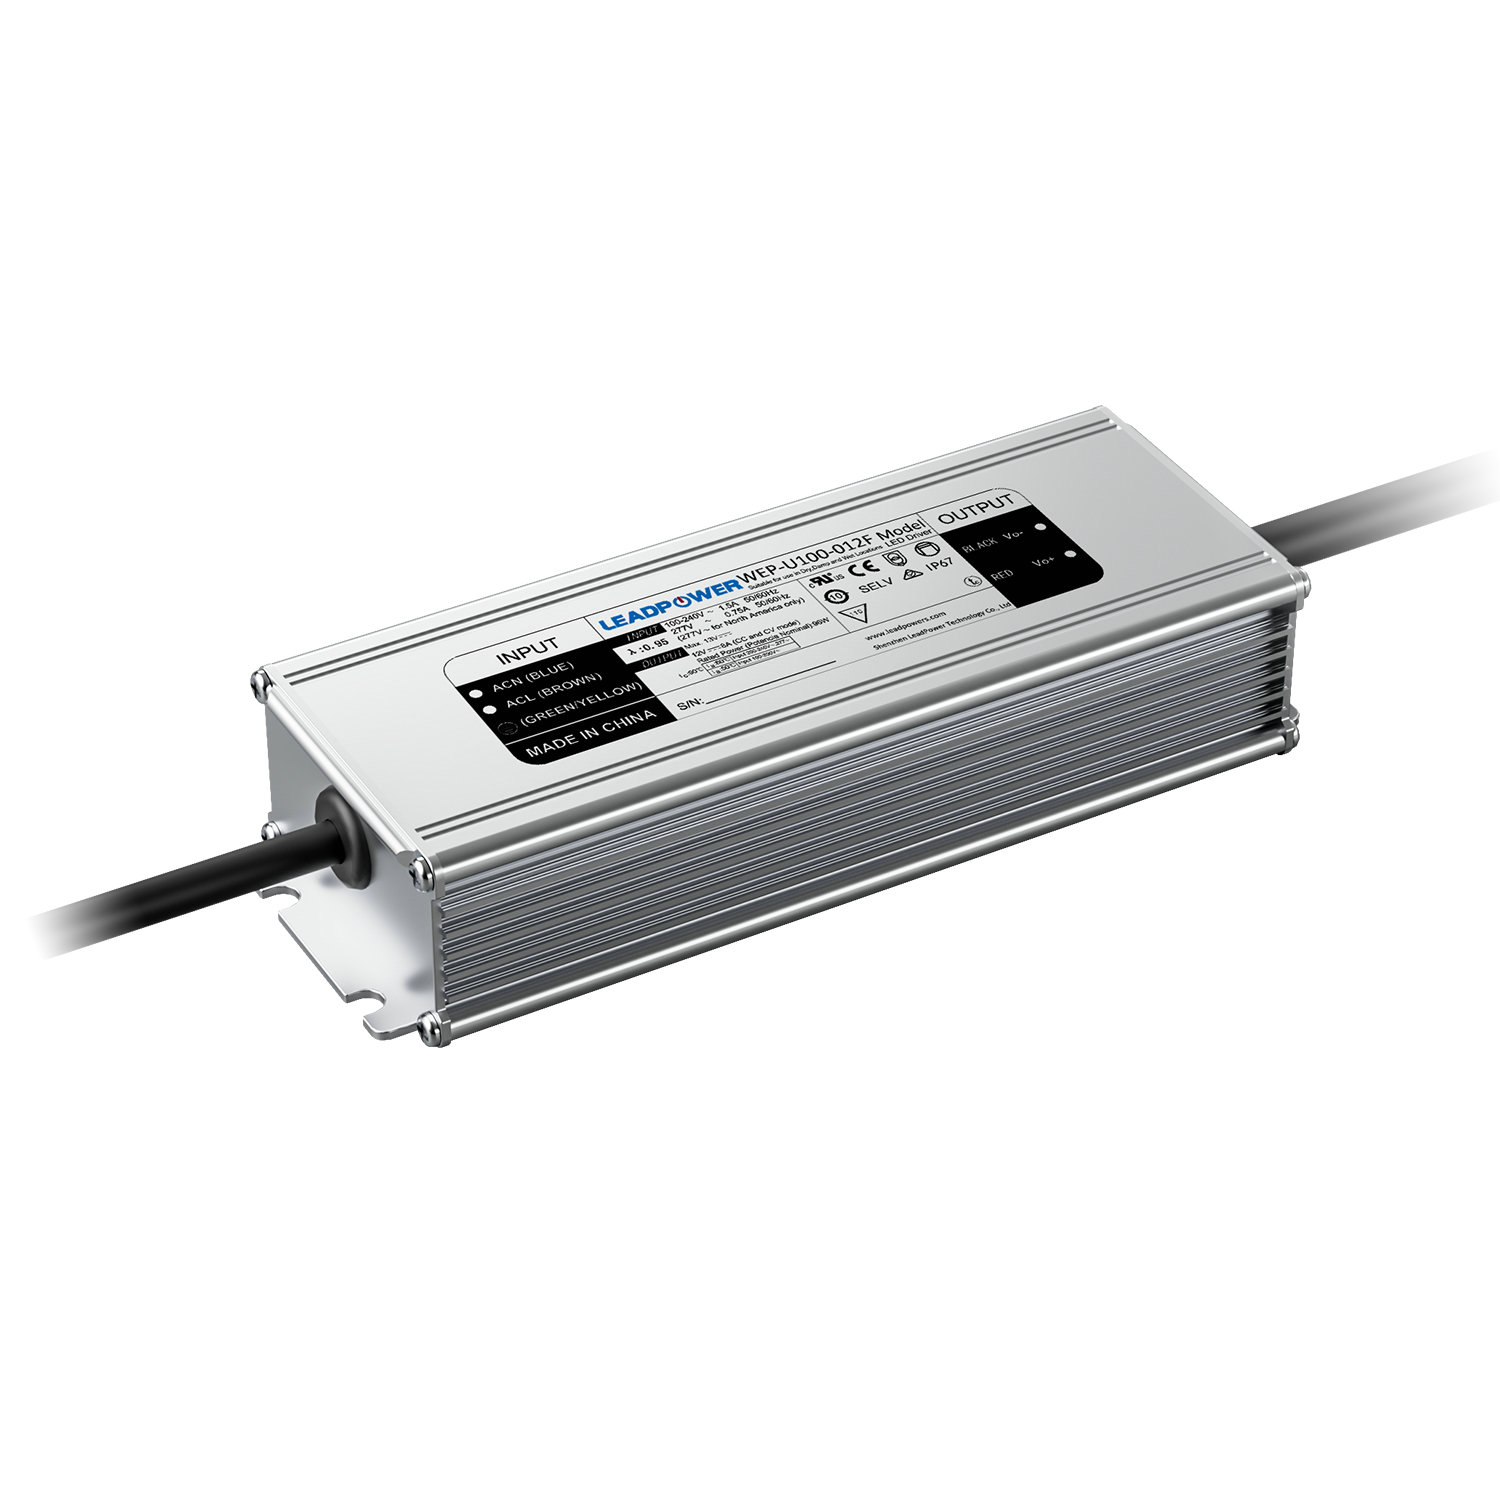 WEP-U100-012F Waterproof LED Power Supply